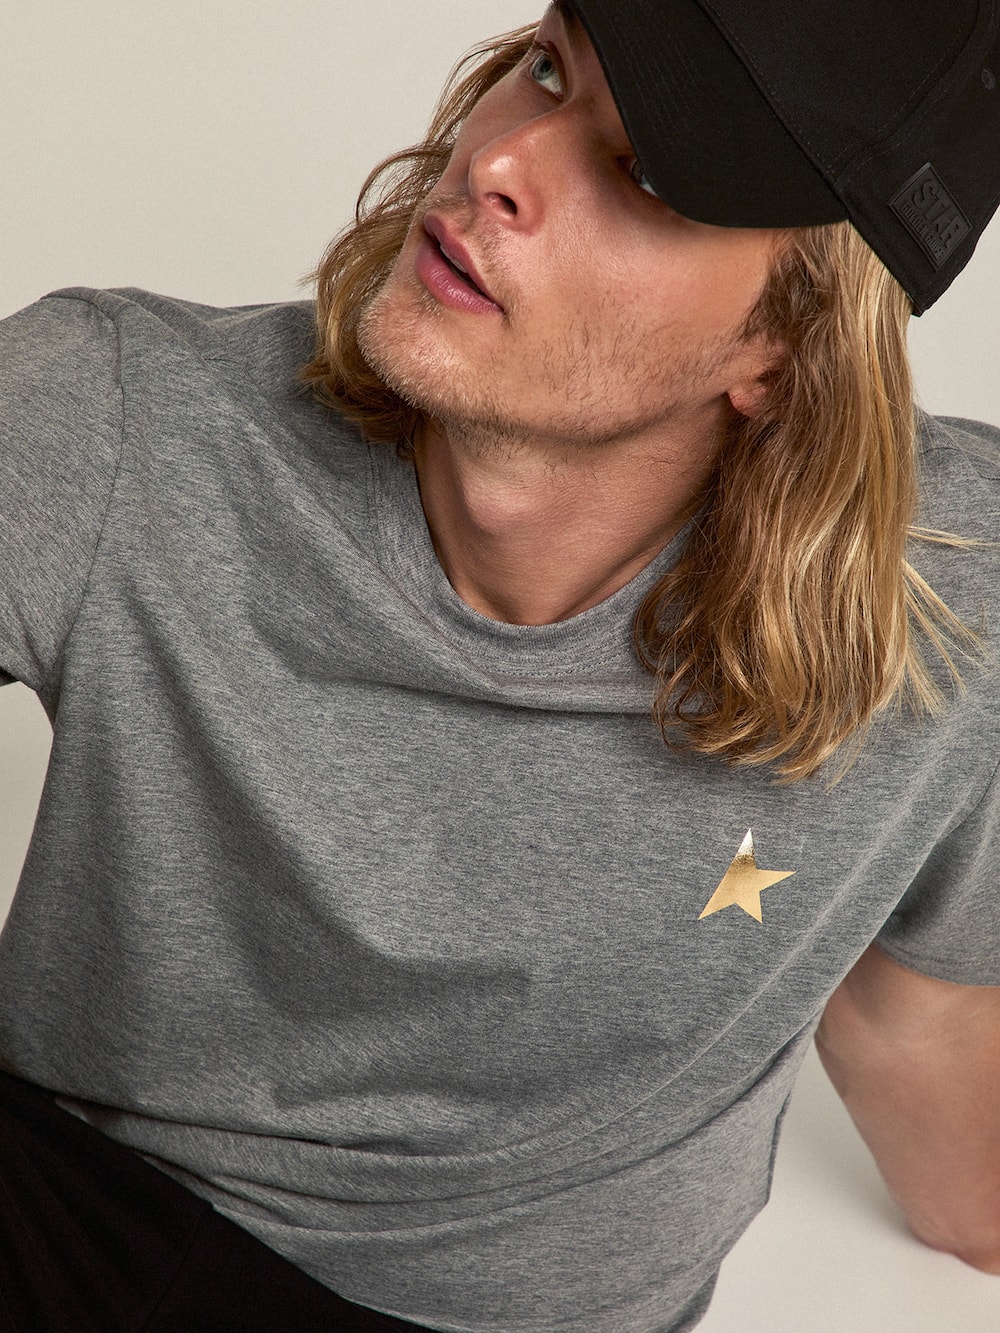 Golden Goose - Camiseta masculina cinza mescla com estrela dourada na frente in 